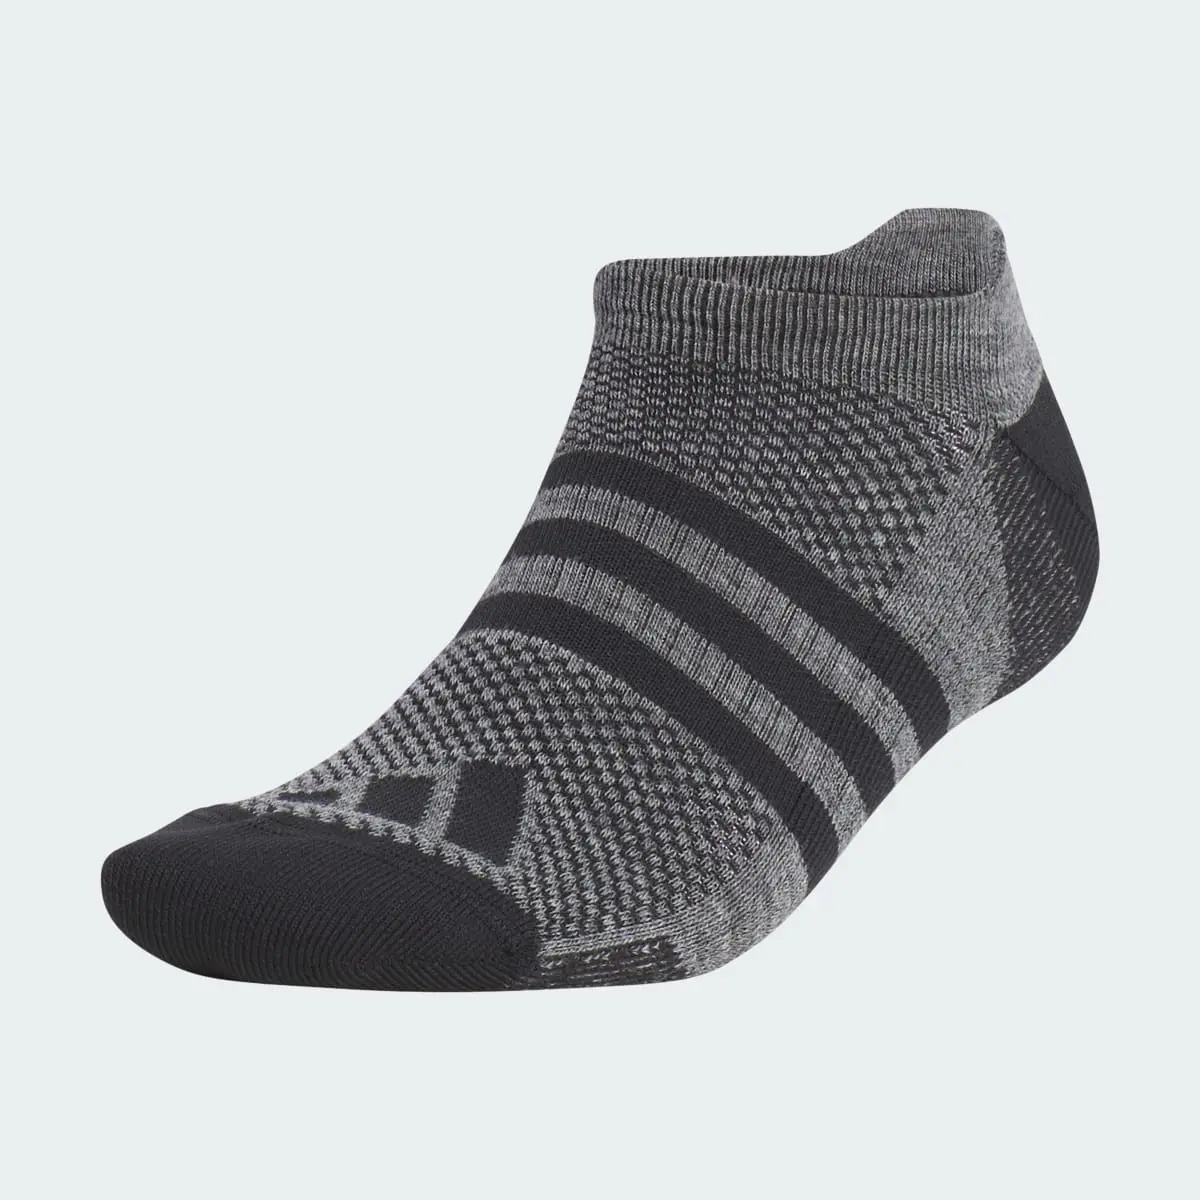 Adidas Wool Low Ankle Golf Socks. 2